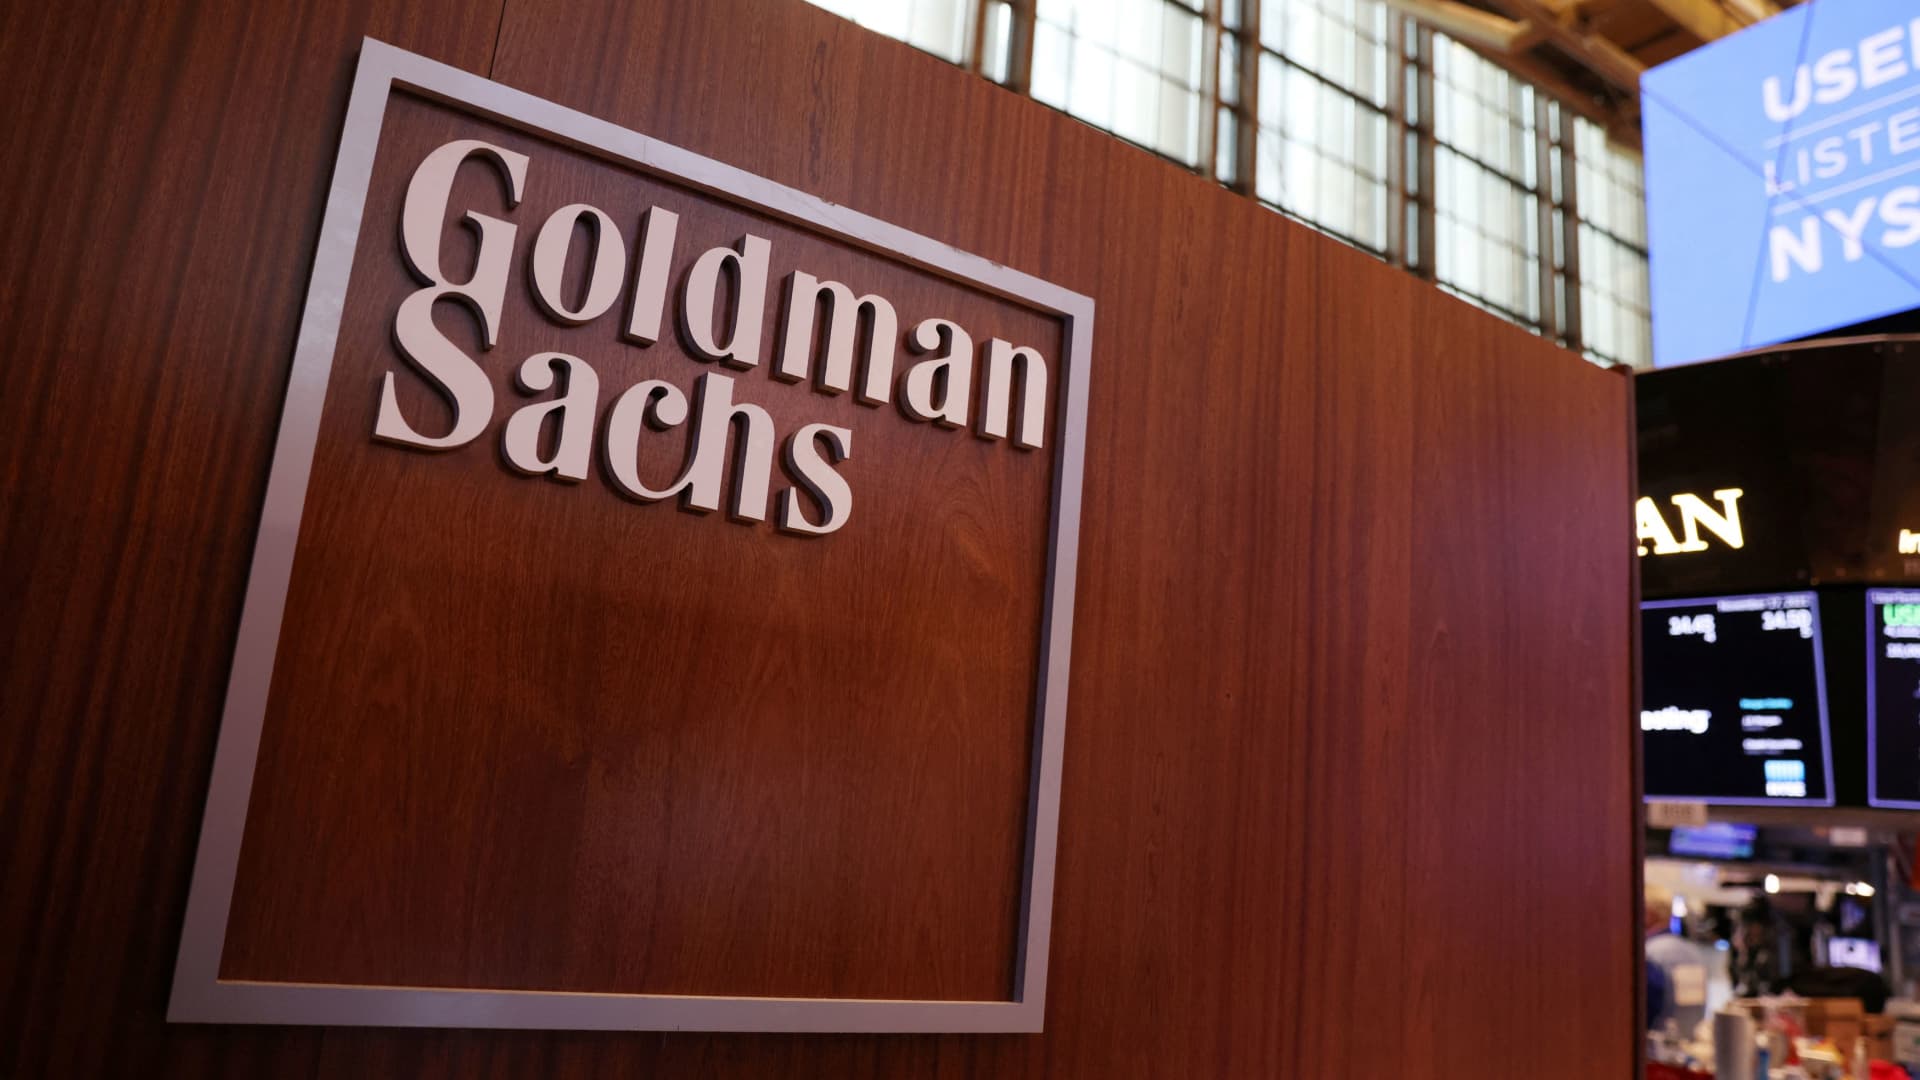 Goldman Sachs promotes Carey Halio to global treasurer